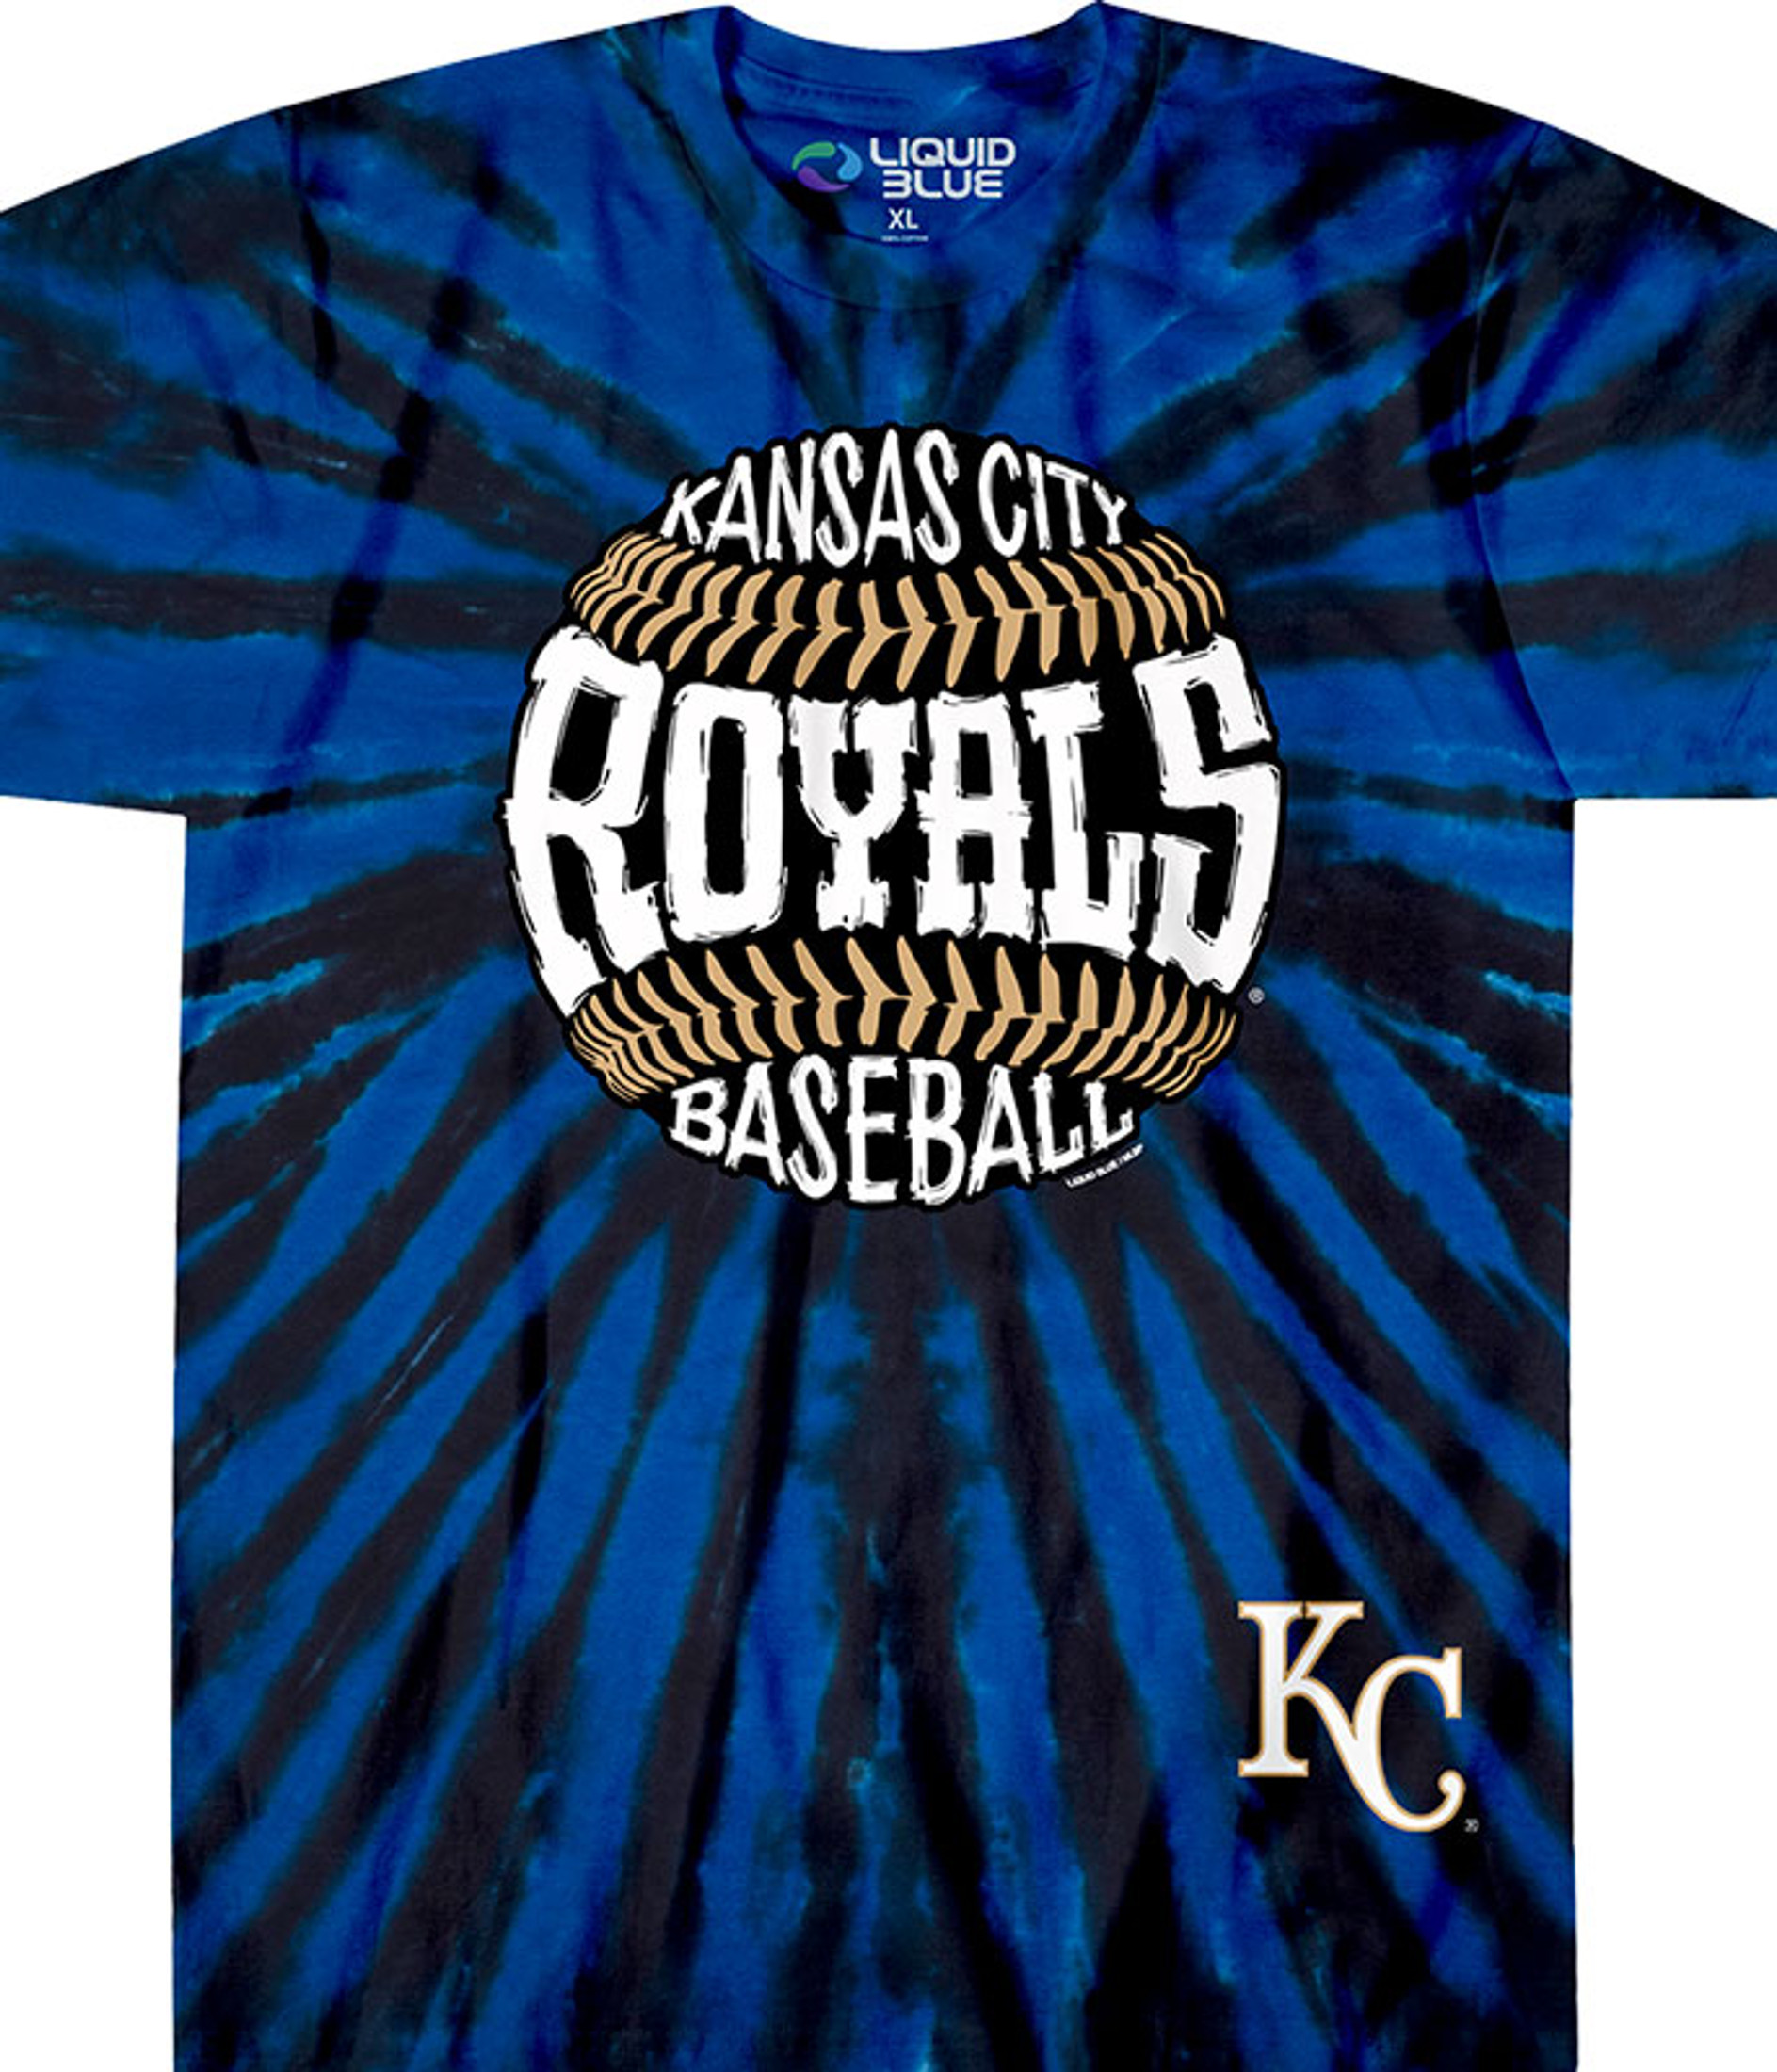 Kansas City Royals Steal Your Base Tie-Dye T-Shirt